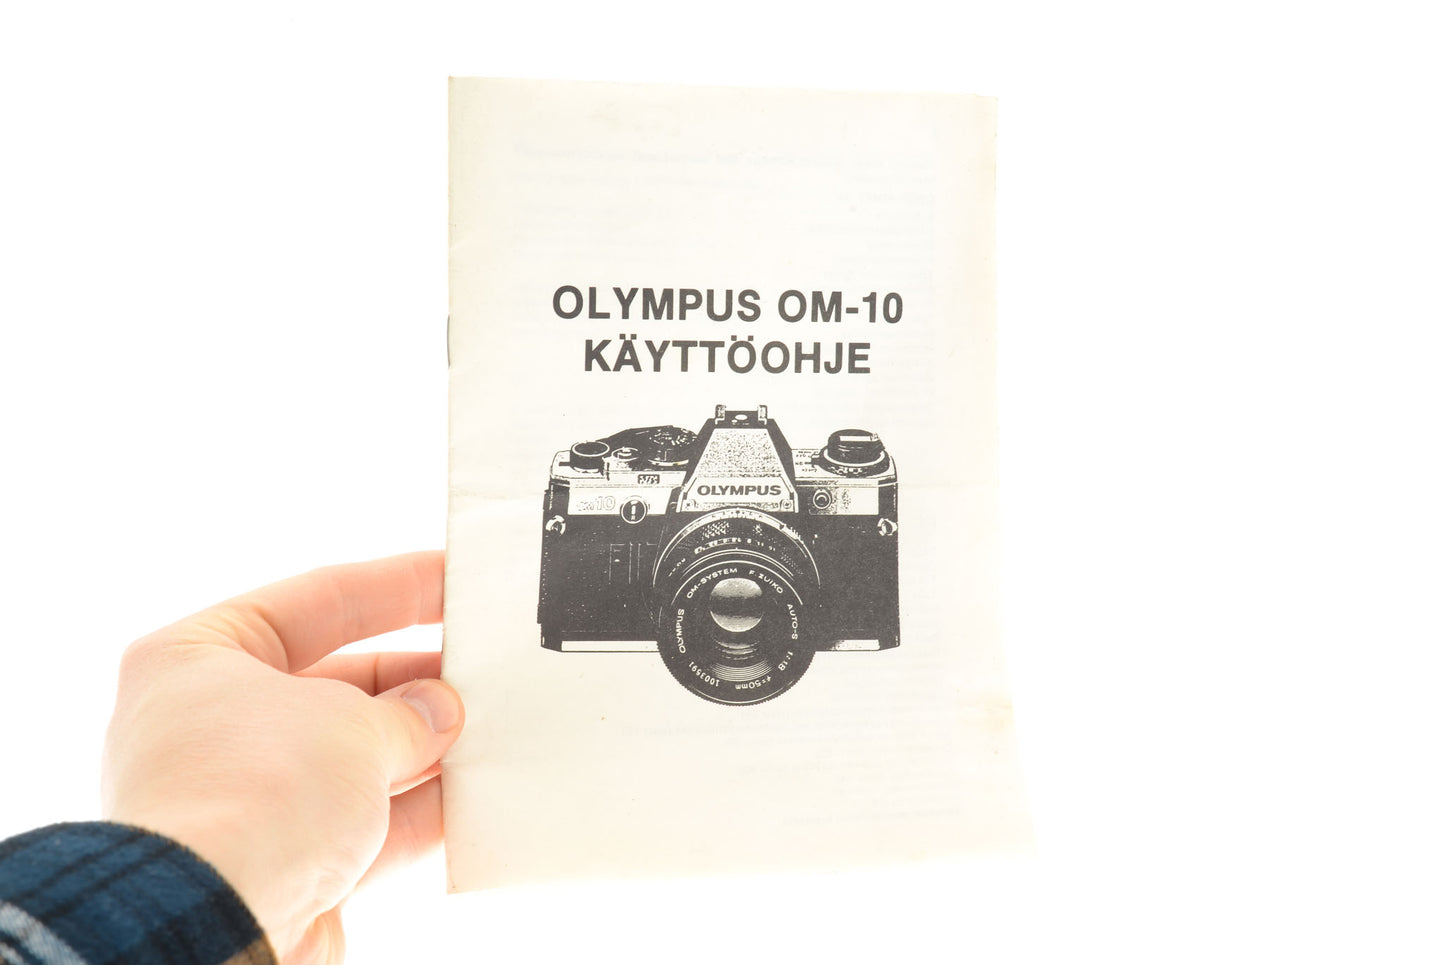 Olympus OM-10 Käyttöohje